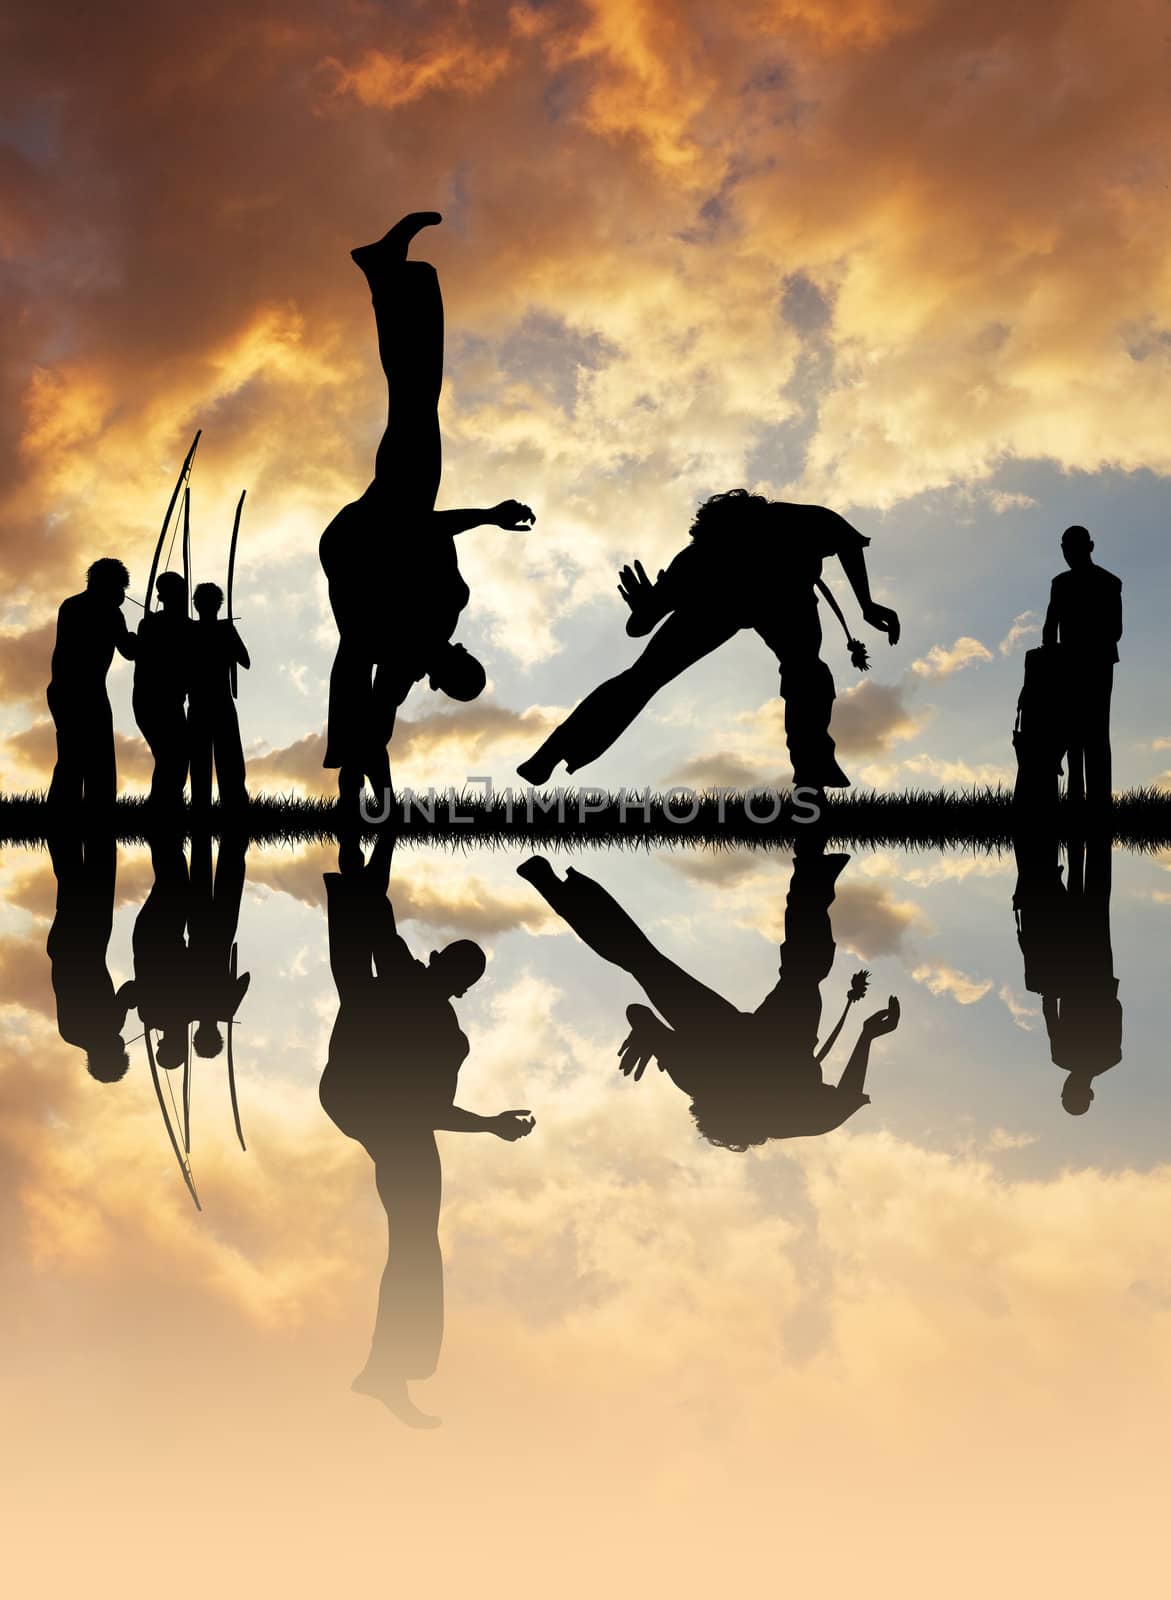 Capoeira at sunset by adrenalina